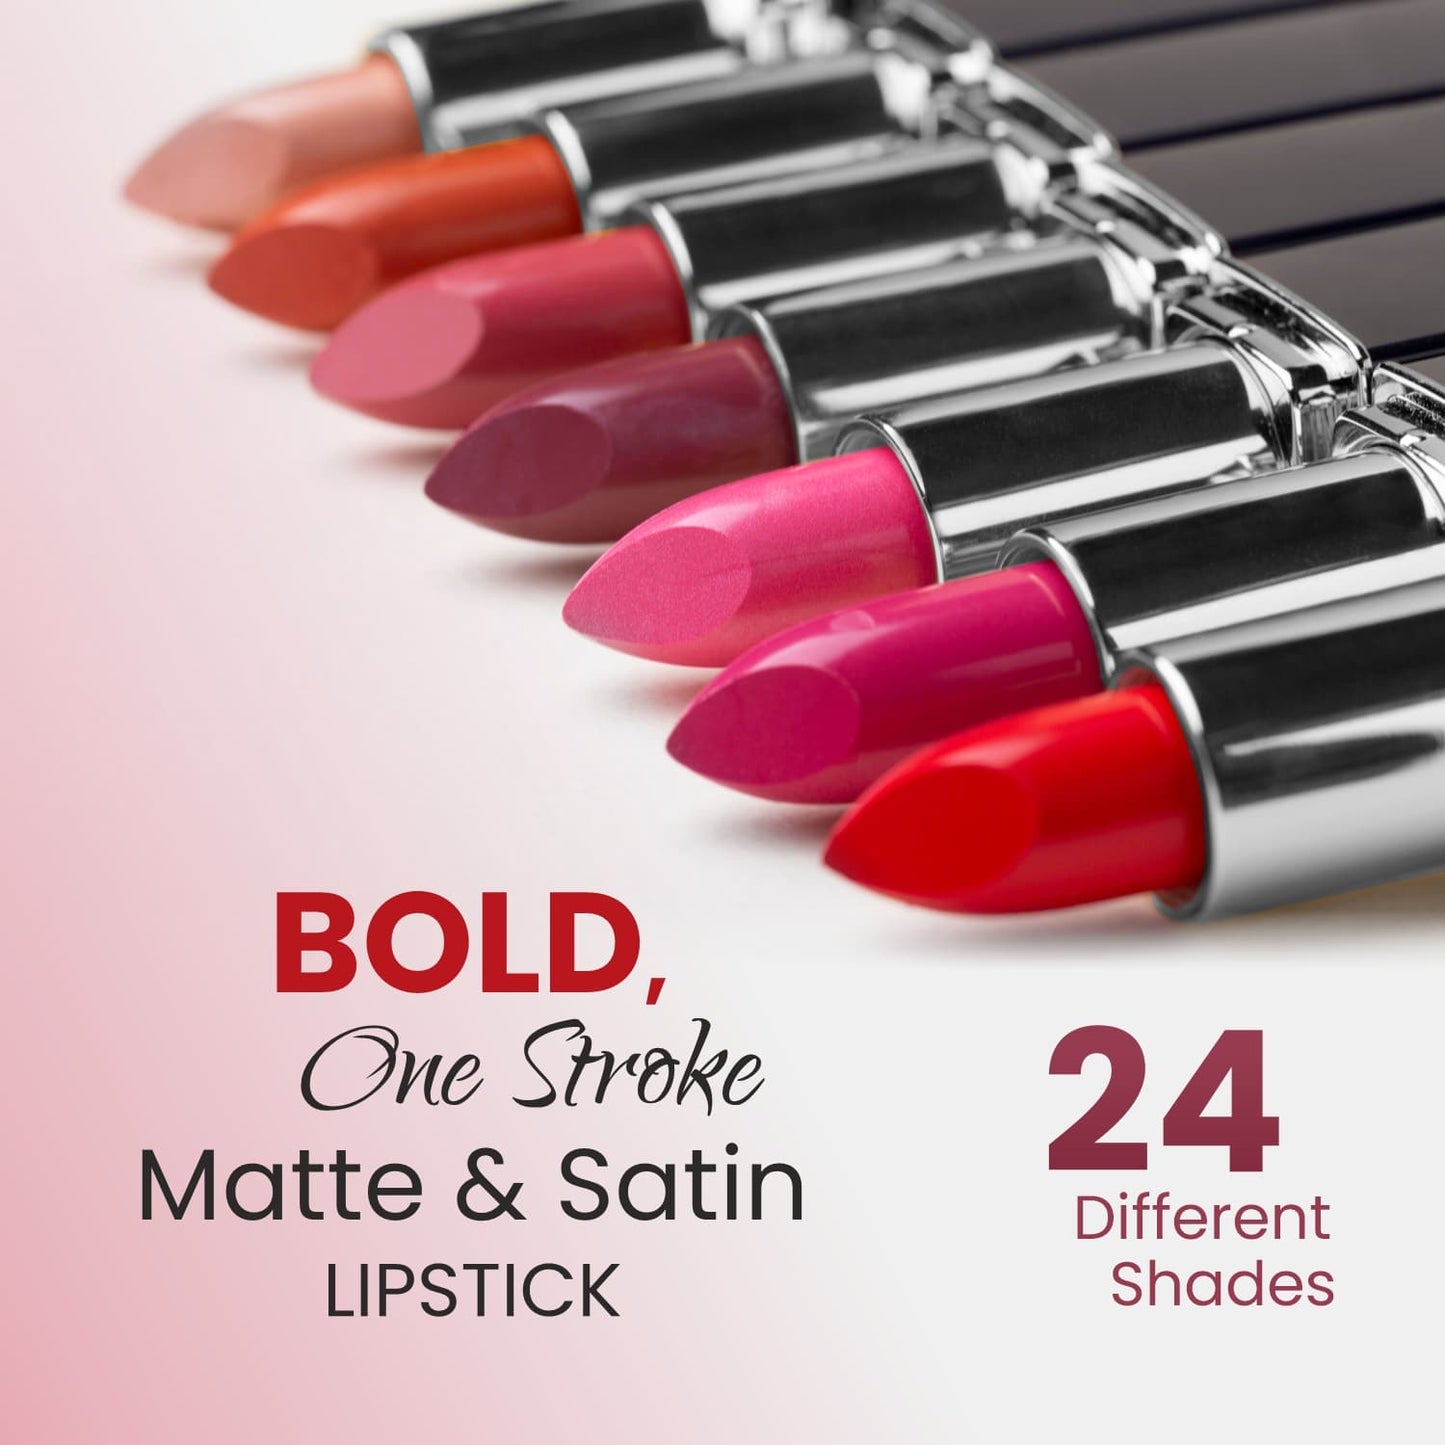 Matte & Satin Lipstick - S20 Valentine